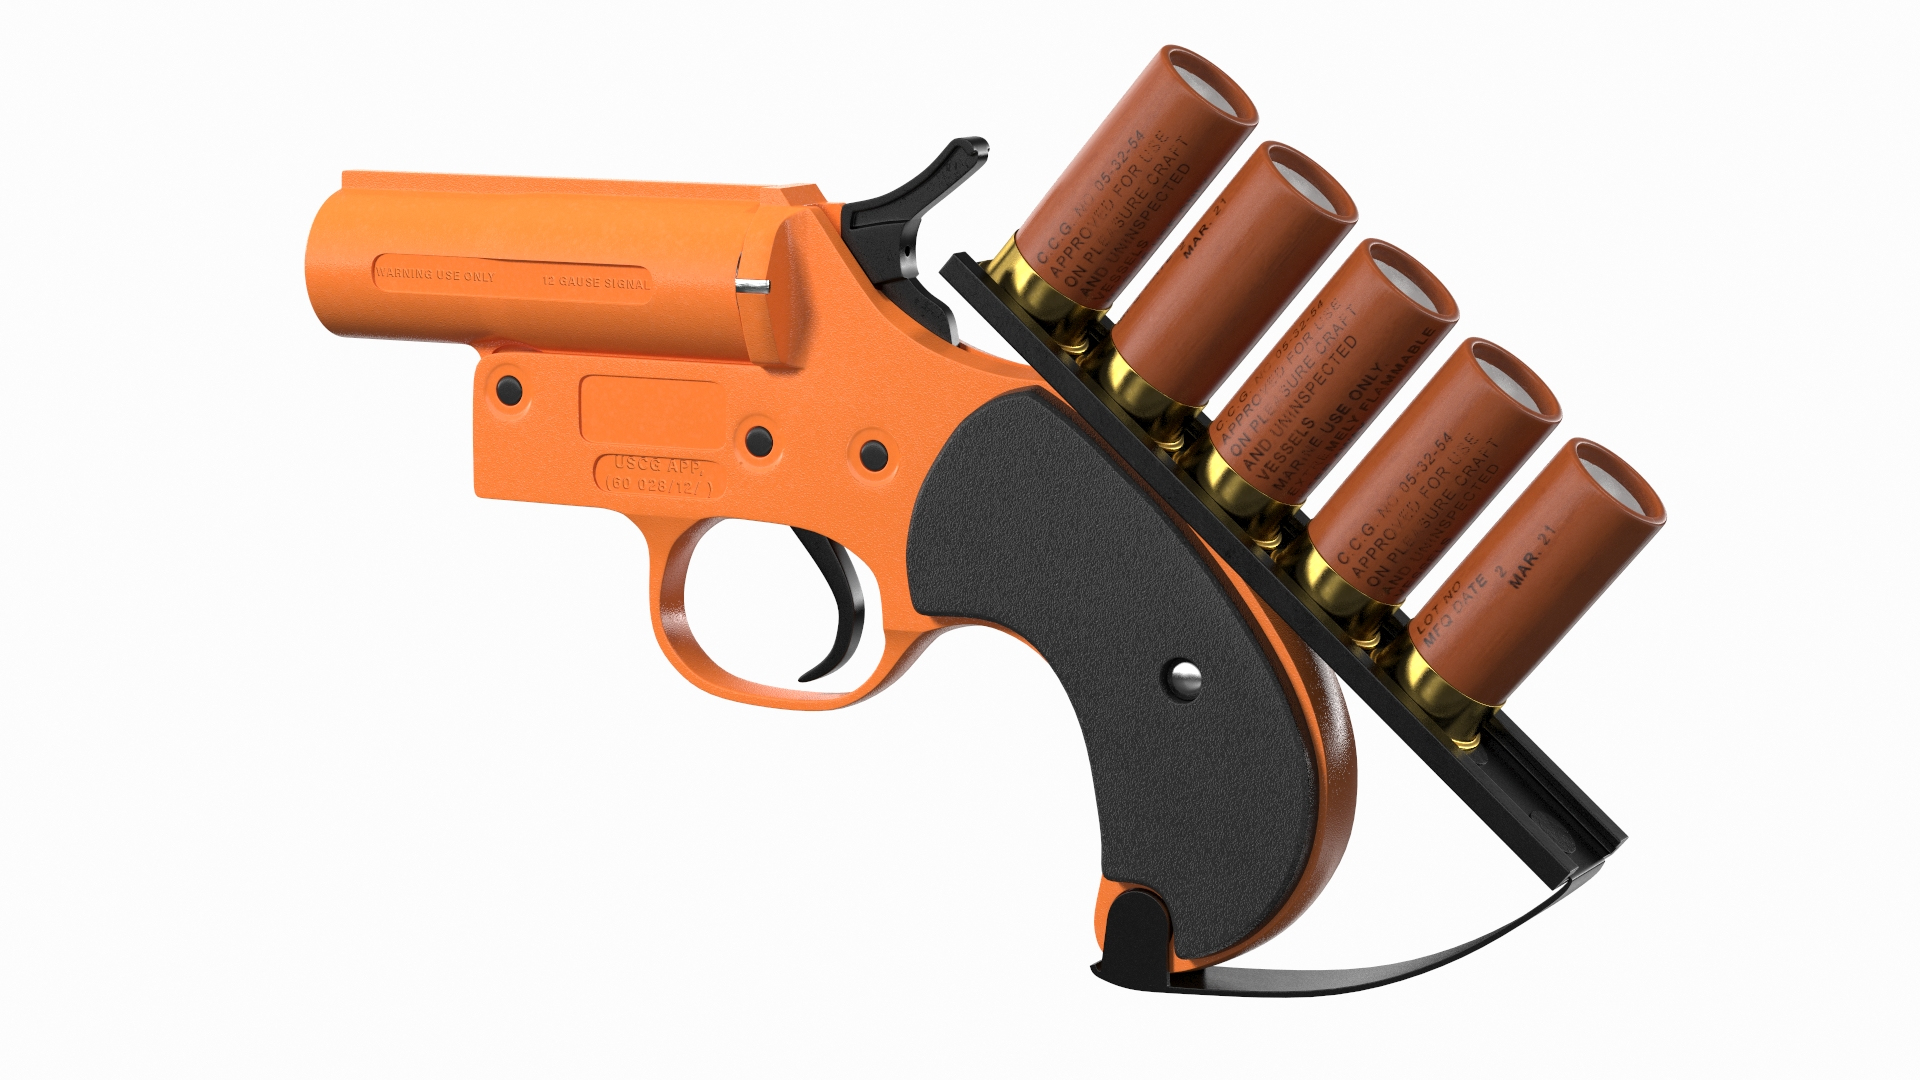 Flare gun Pistol Caliber Signal, pistol transparent background PNG clipart